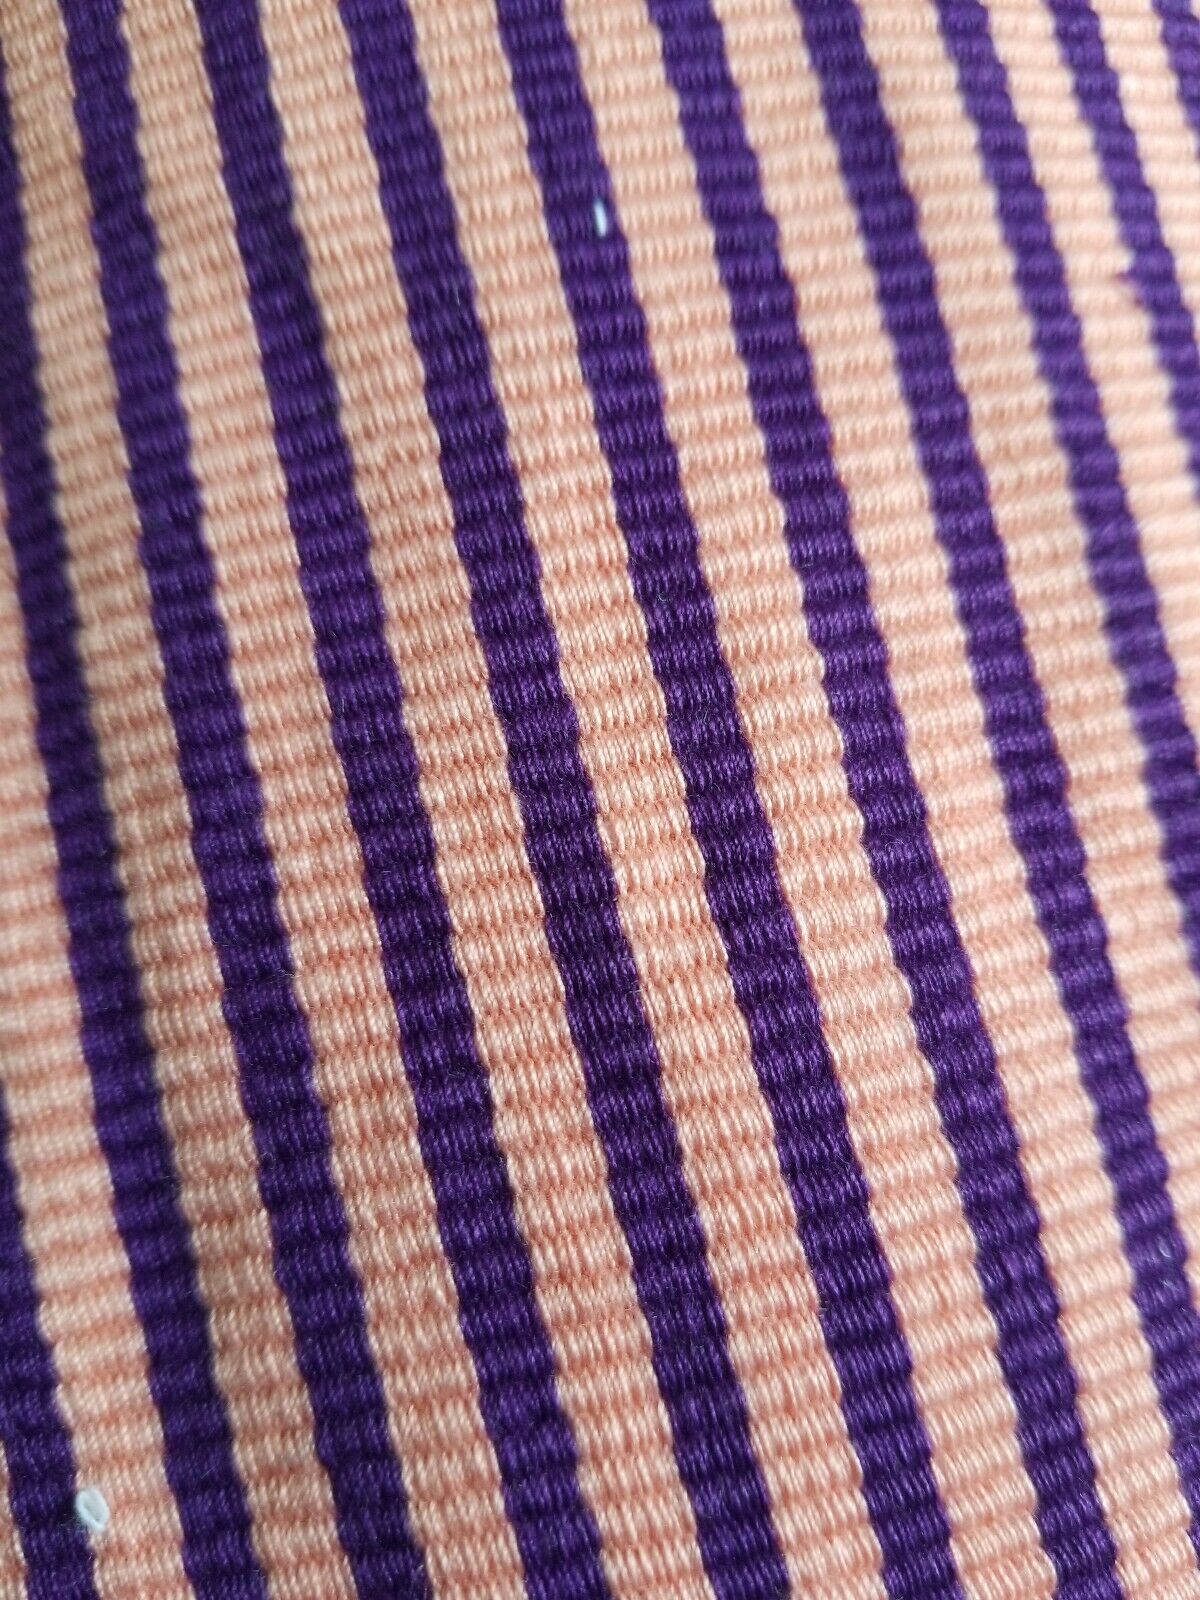 Faso Da Fani Fabric From Boukina Faso~peach with purple stripes 79"(2yds&7")×15"